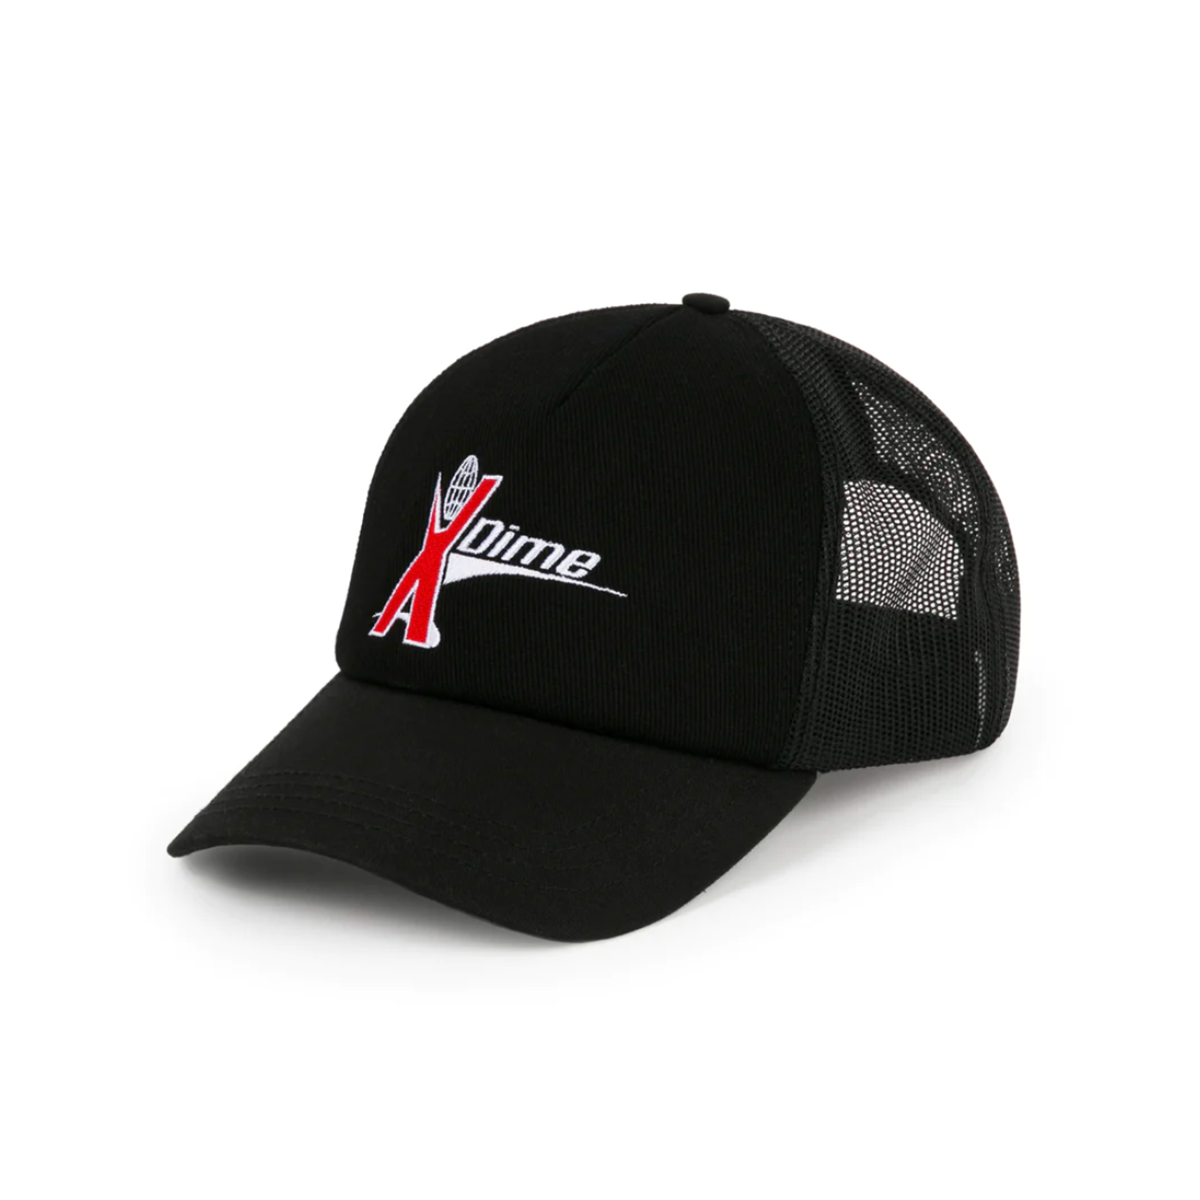 Dime 900 Trucker Hat - Black